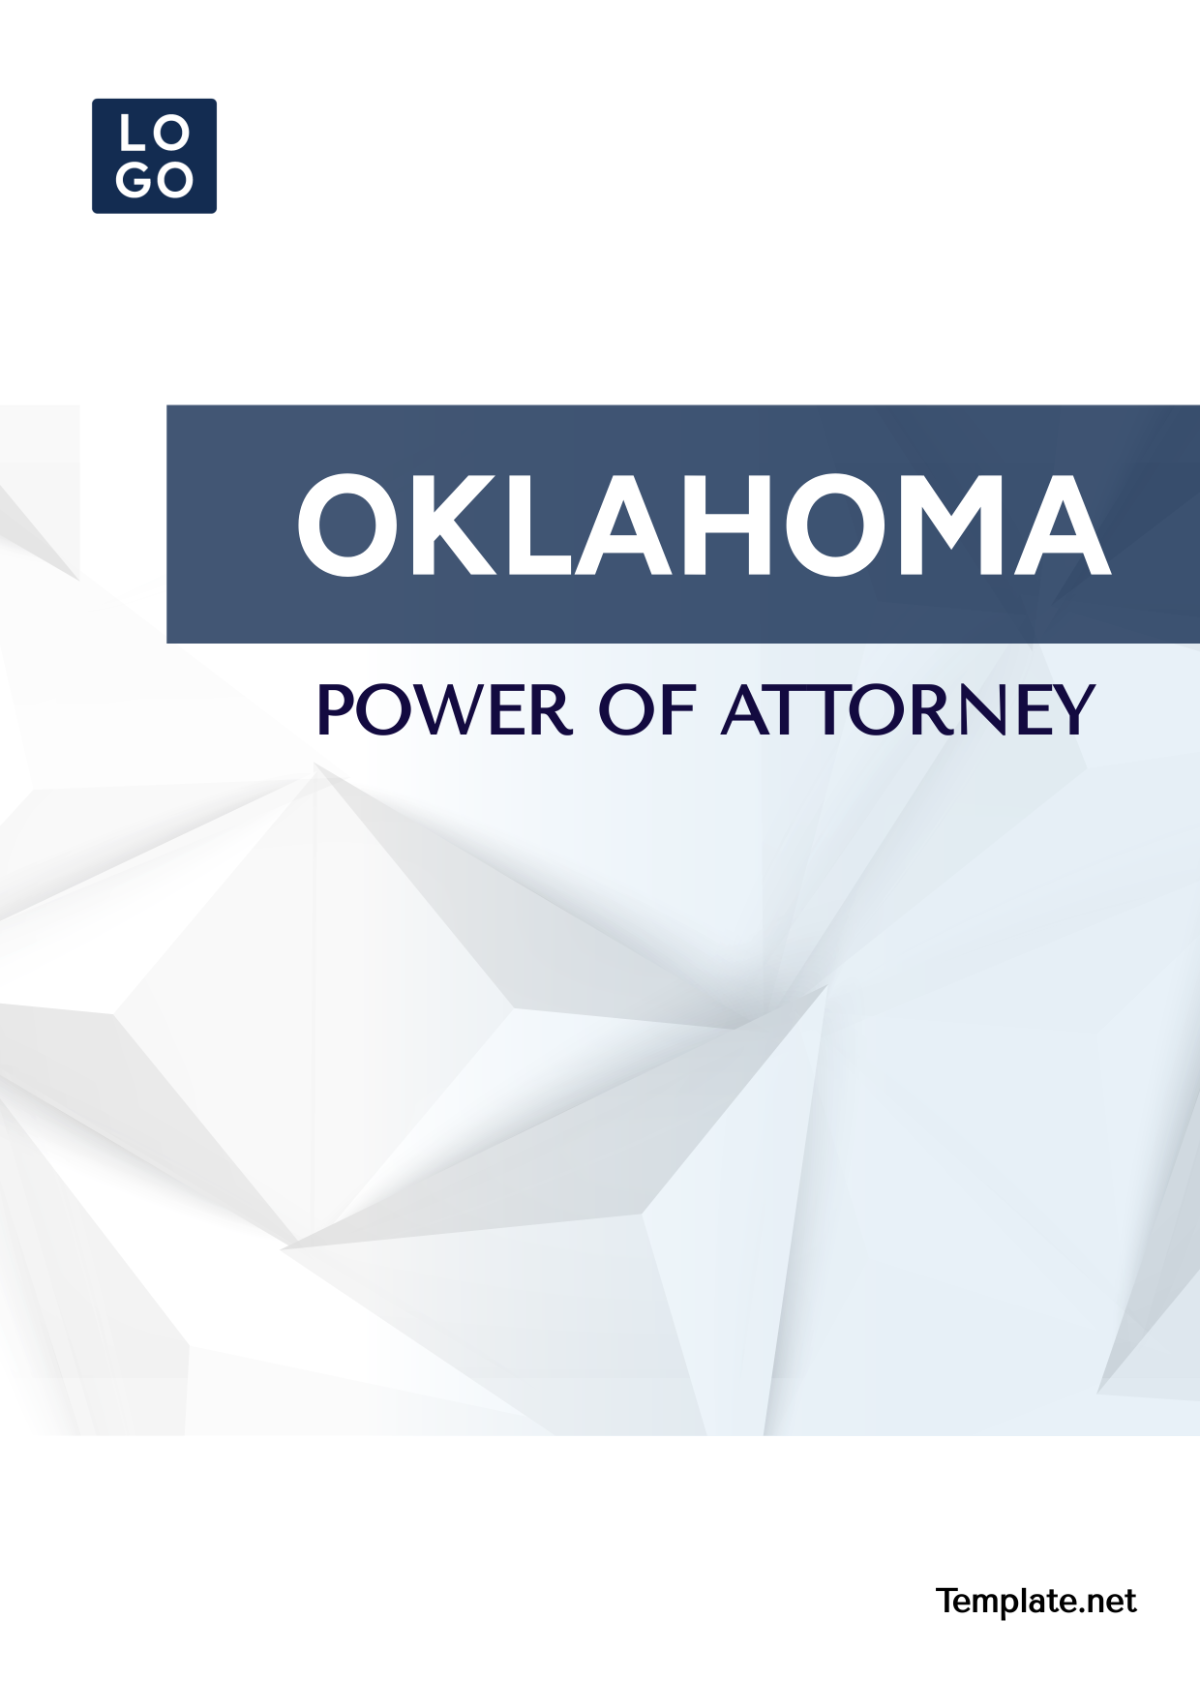 Oklahoma Power of Attorney Template